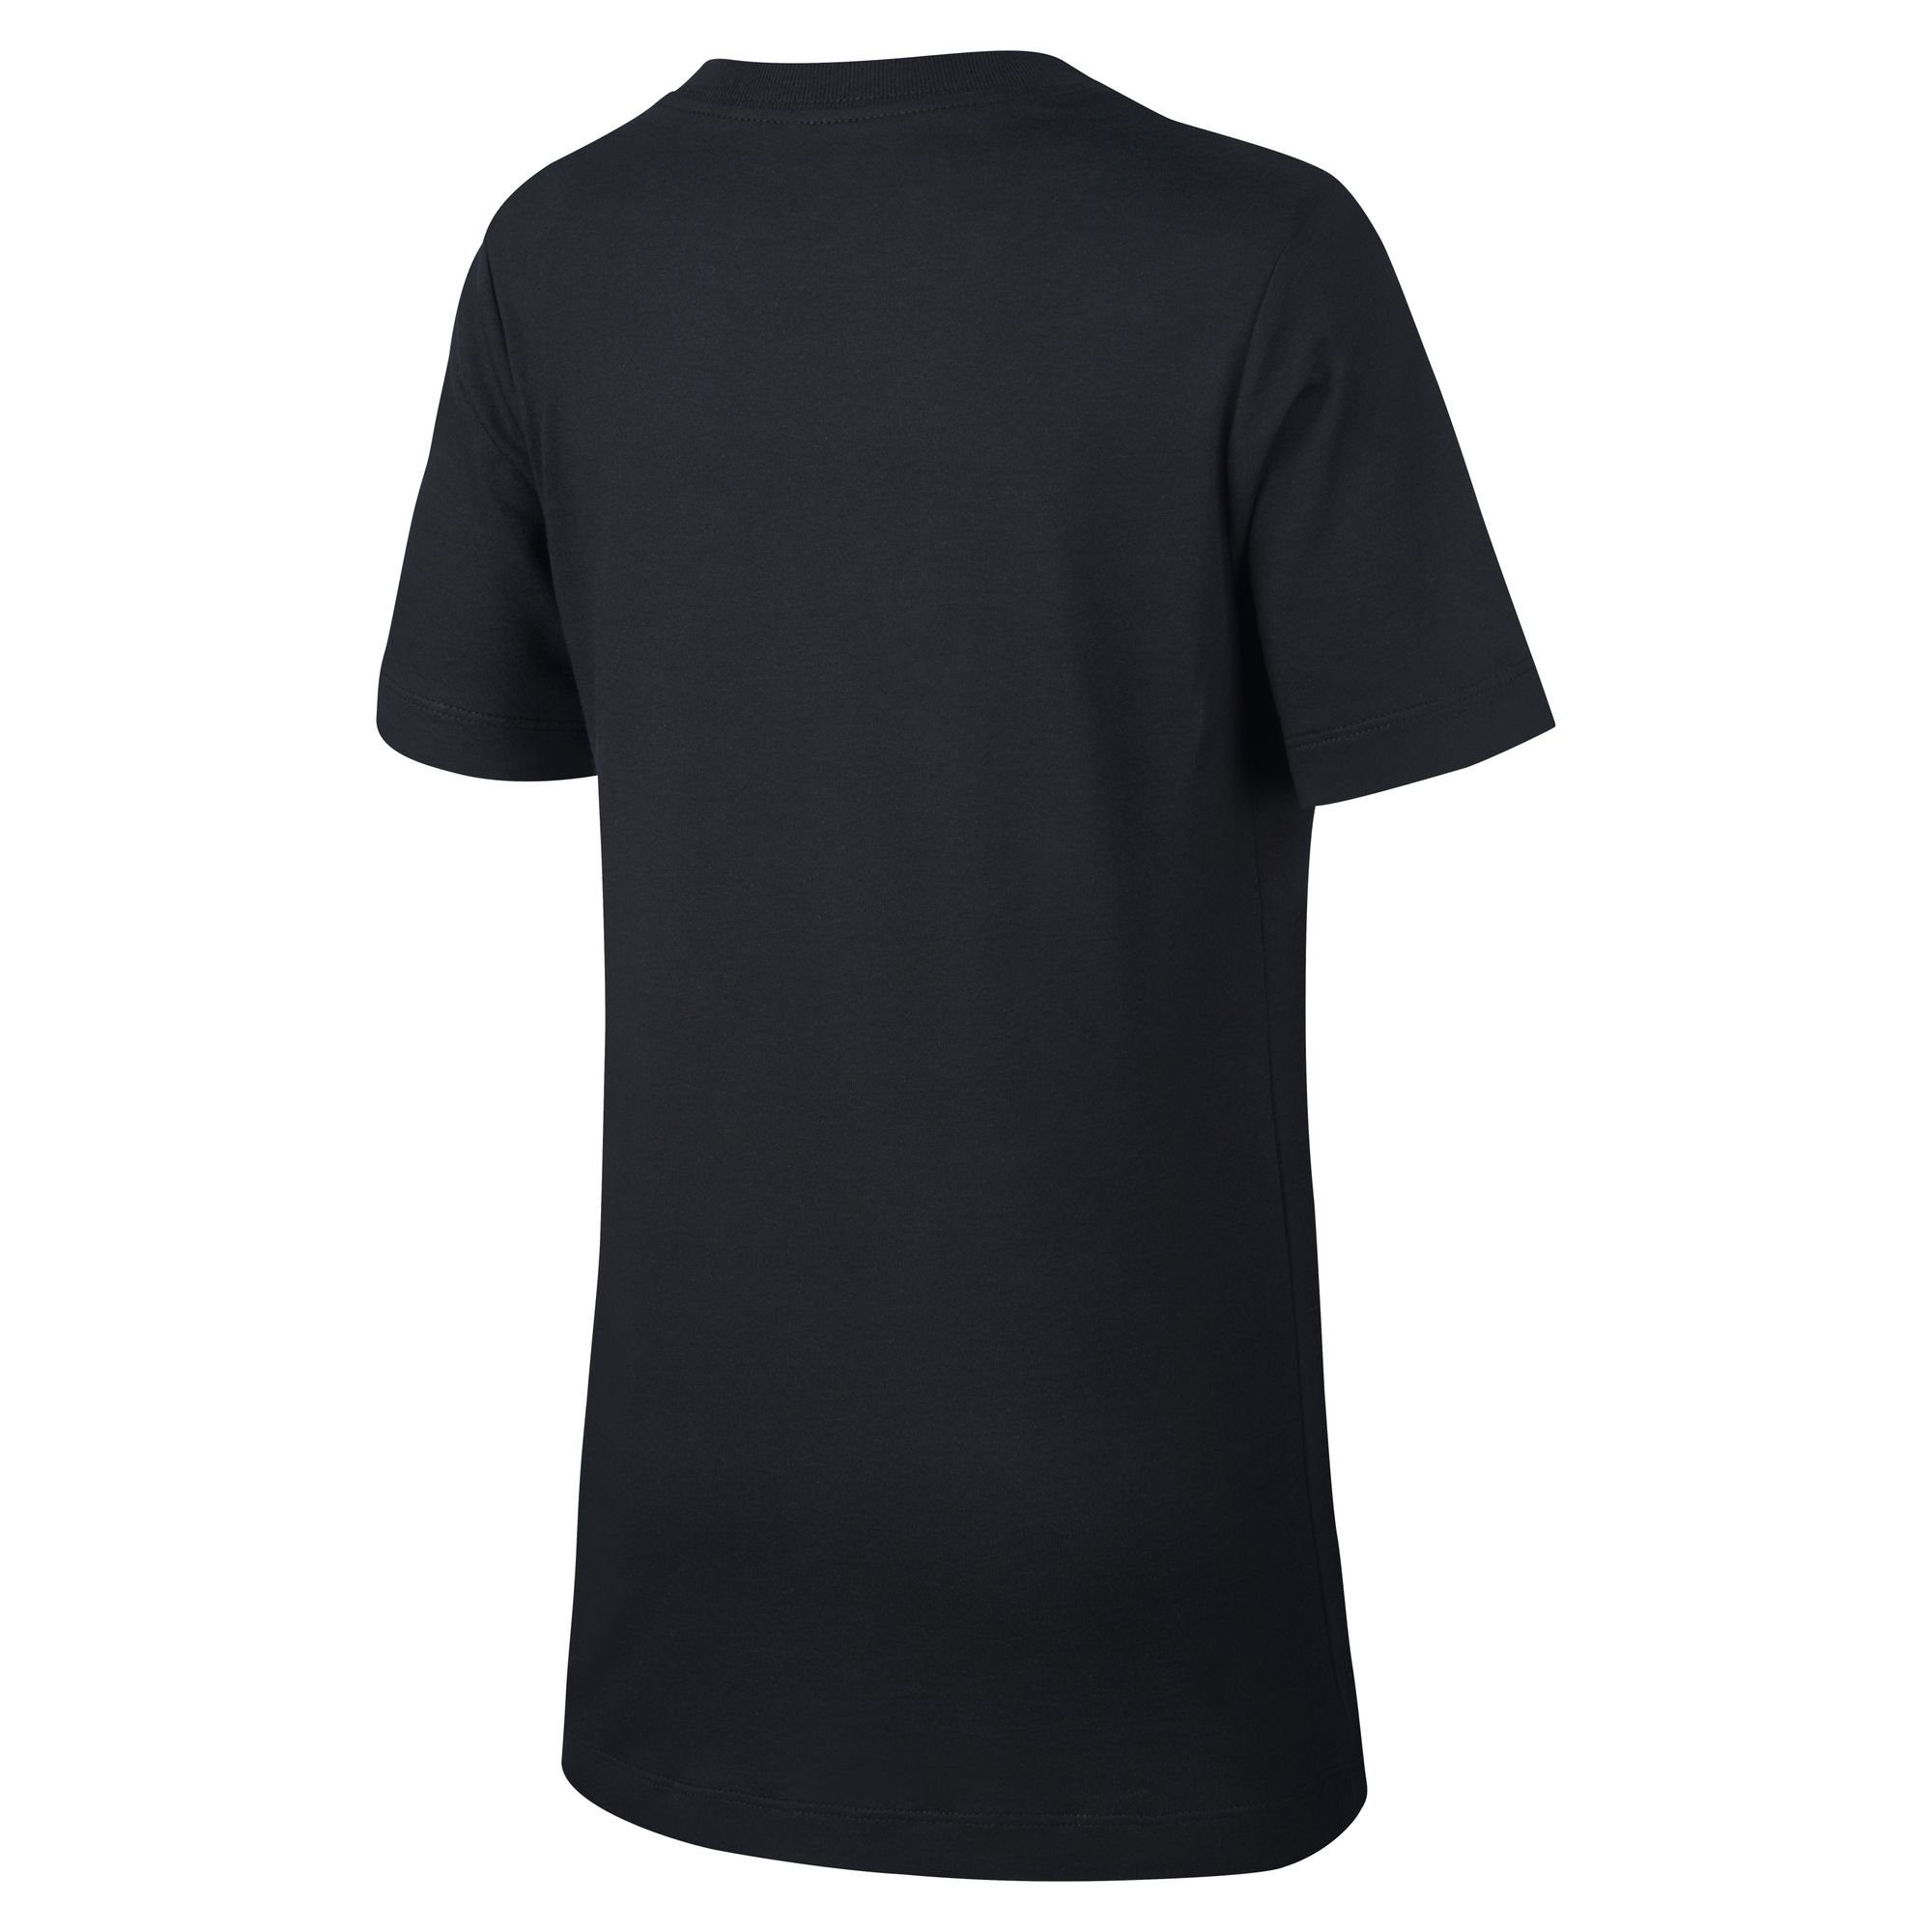 Nike Sportswear T-Shirt schwarz KIDS' BIG T-SHIRT